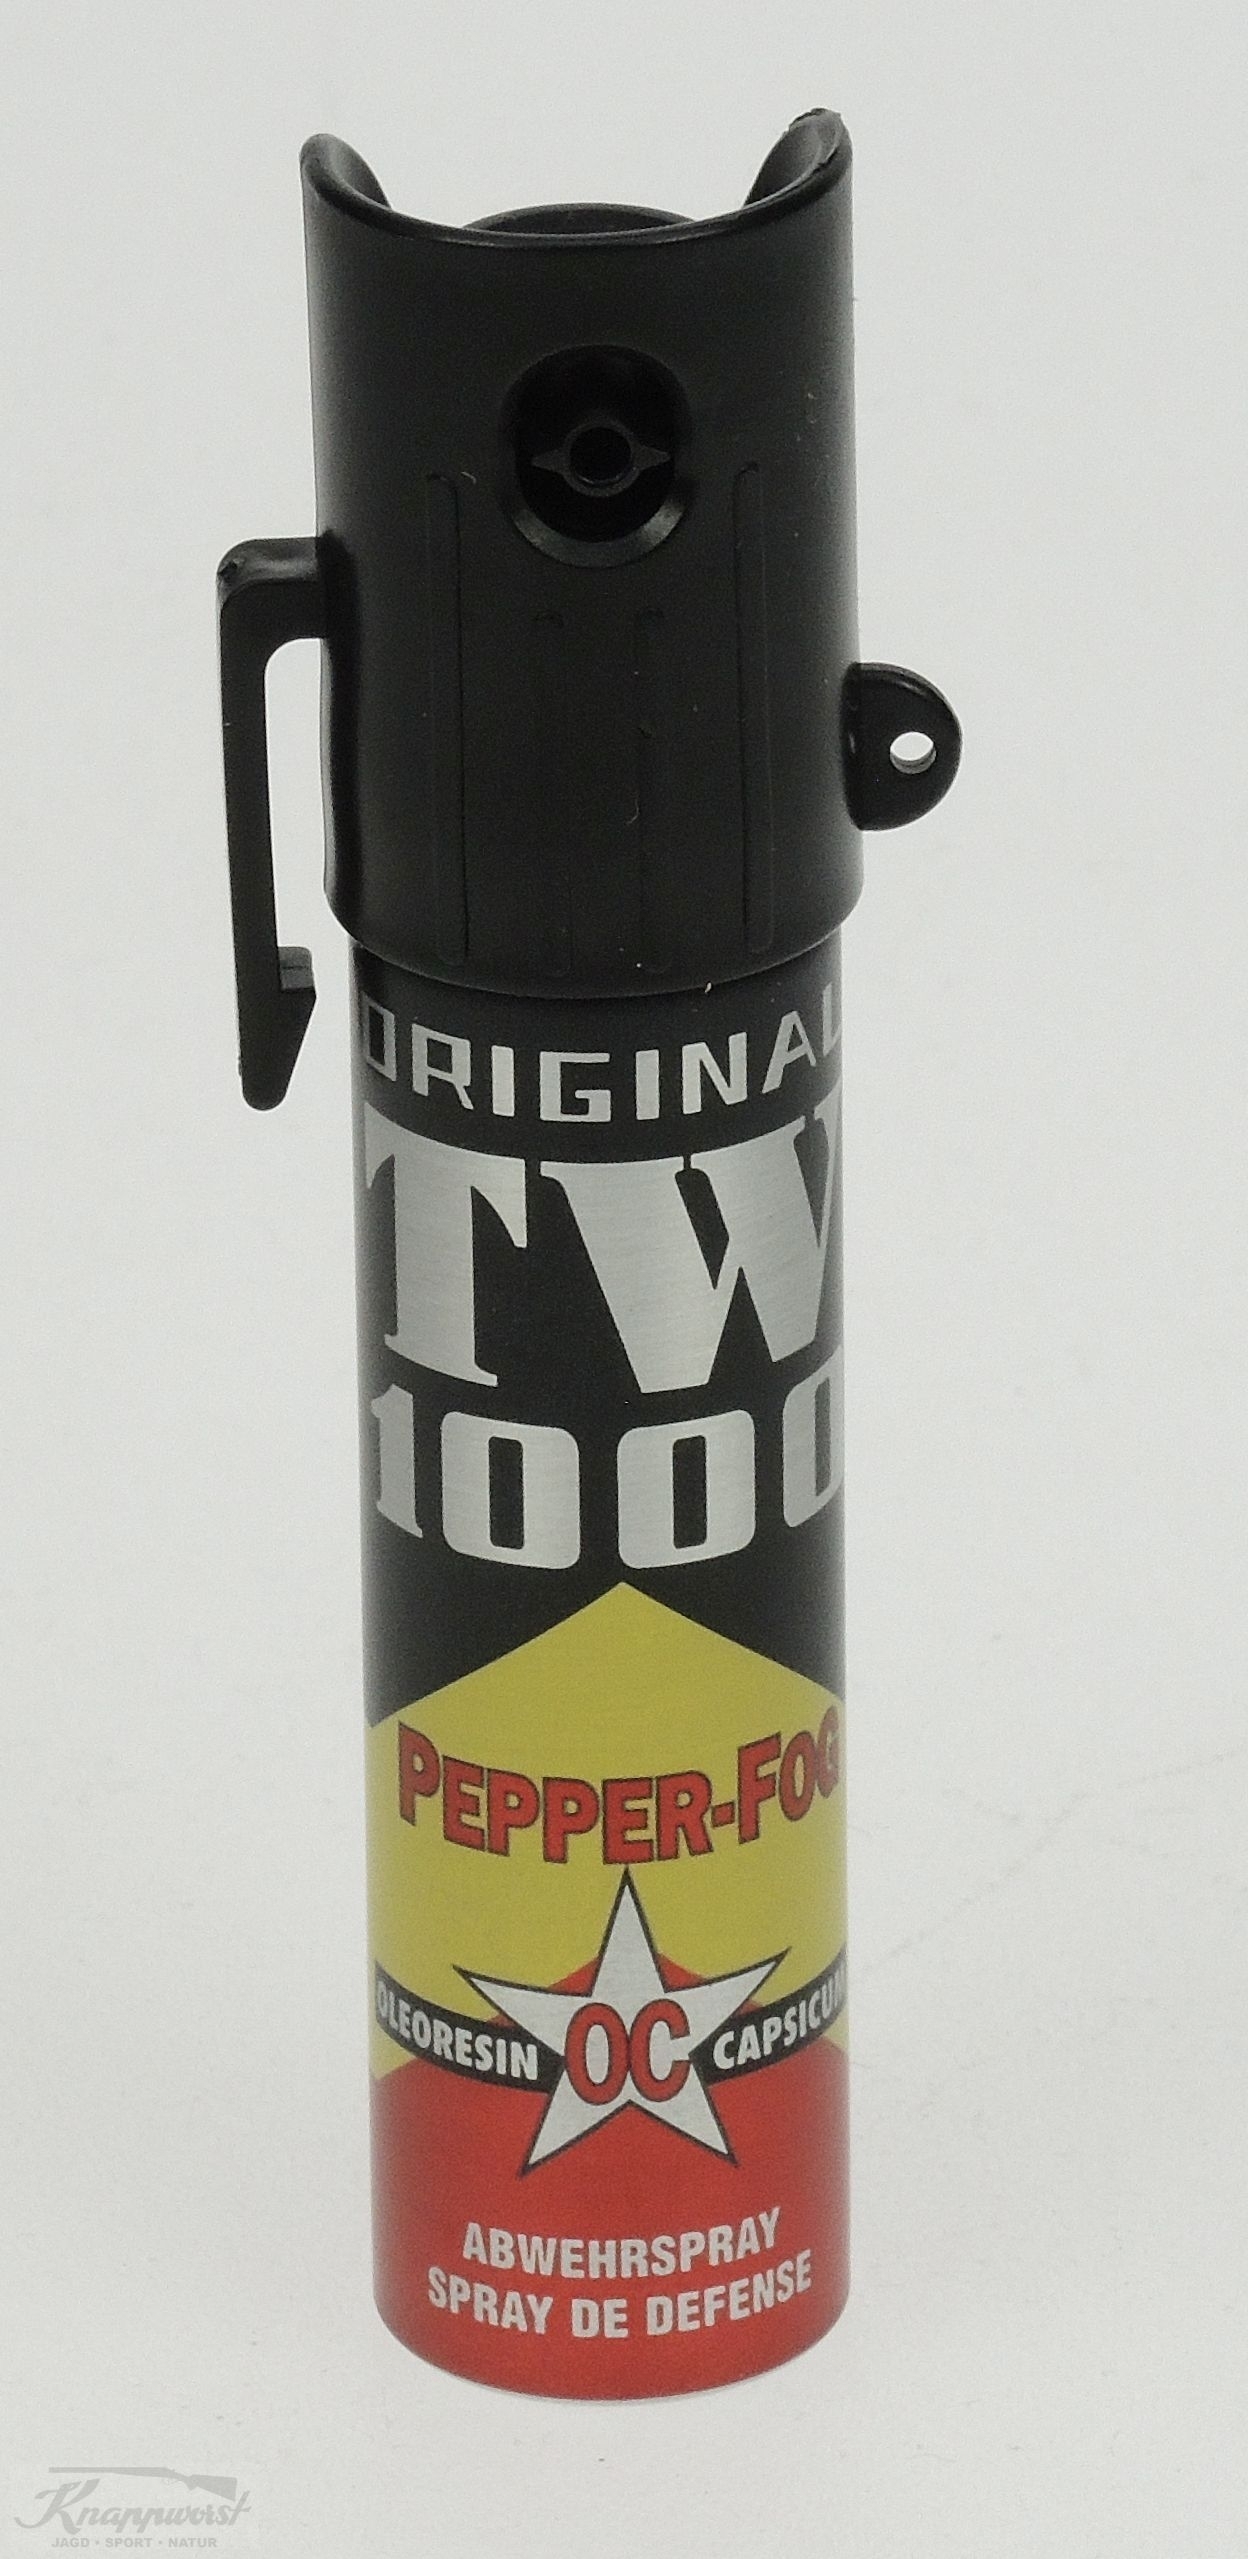 TW 1000 Pepper-Fog Lady 20ml